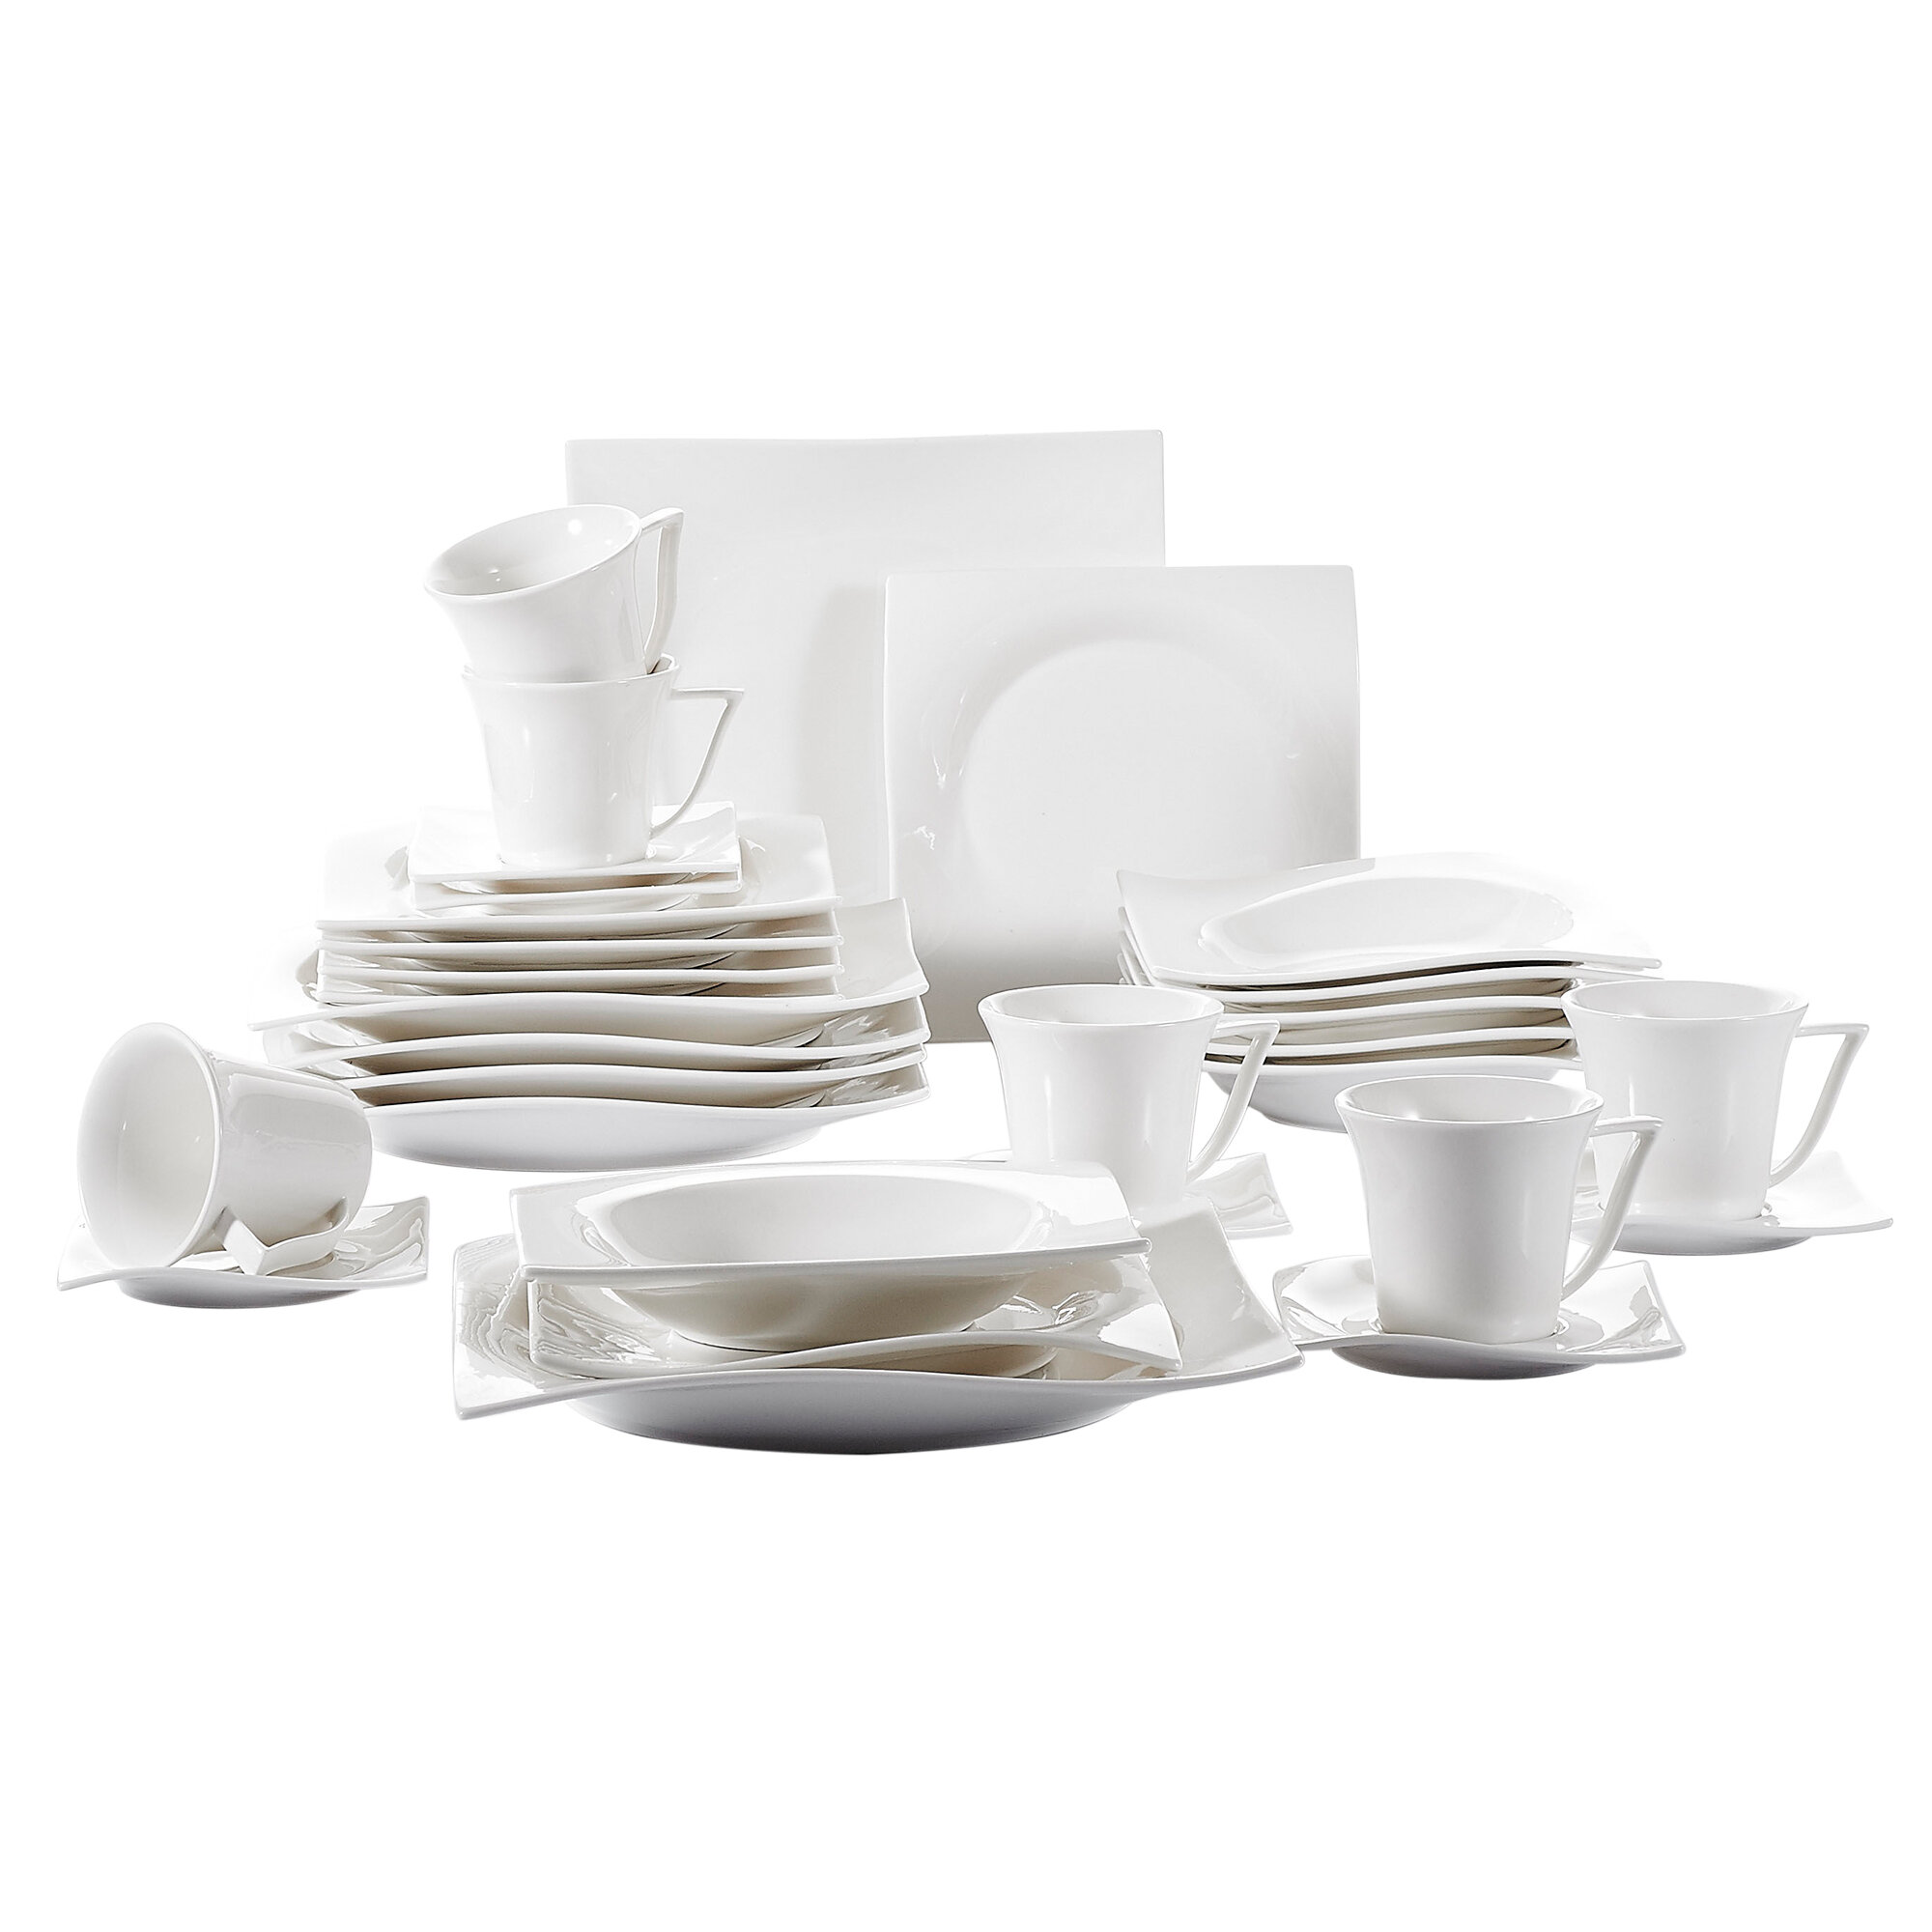 MALACASA Flora 30-Piece Casual Ivory White Porcelain Dinnerware